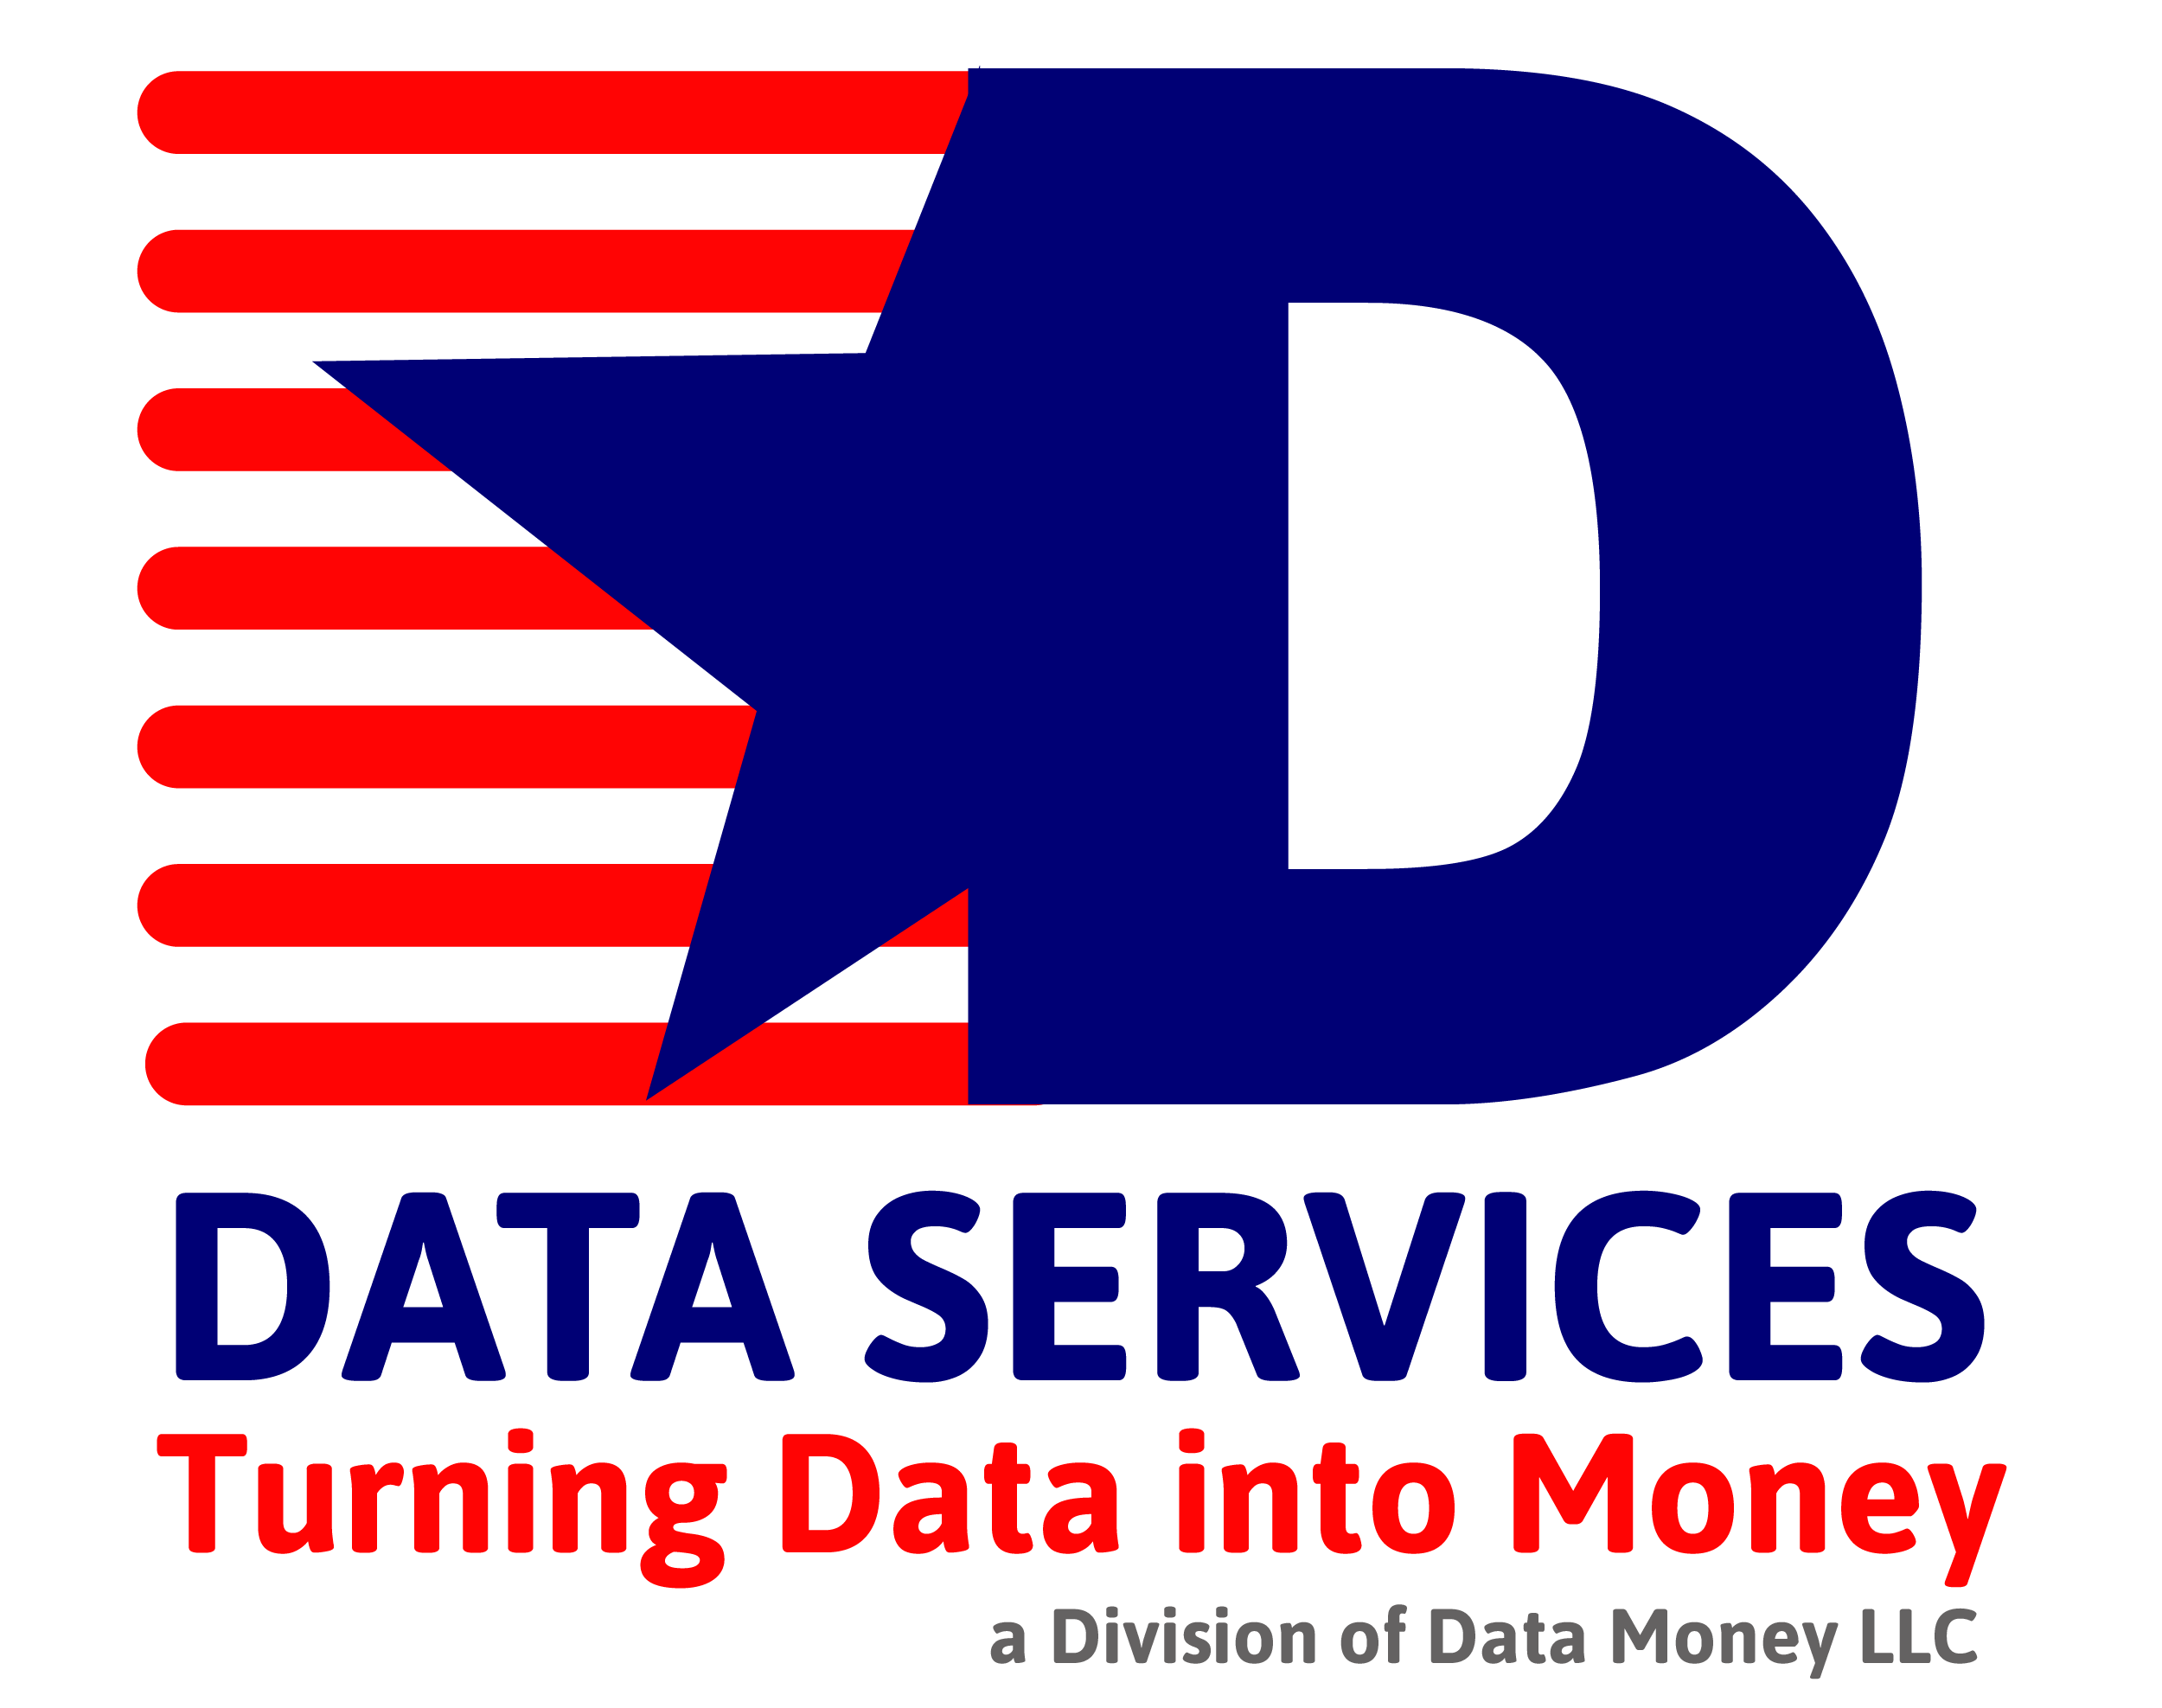 DataServicesInc.com®